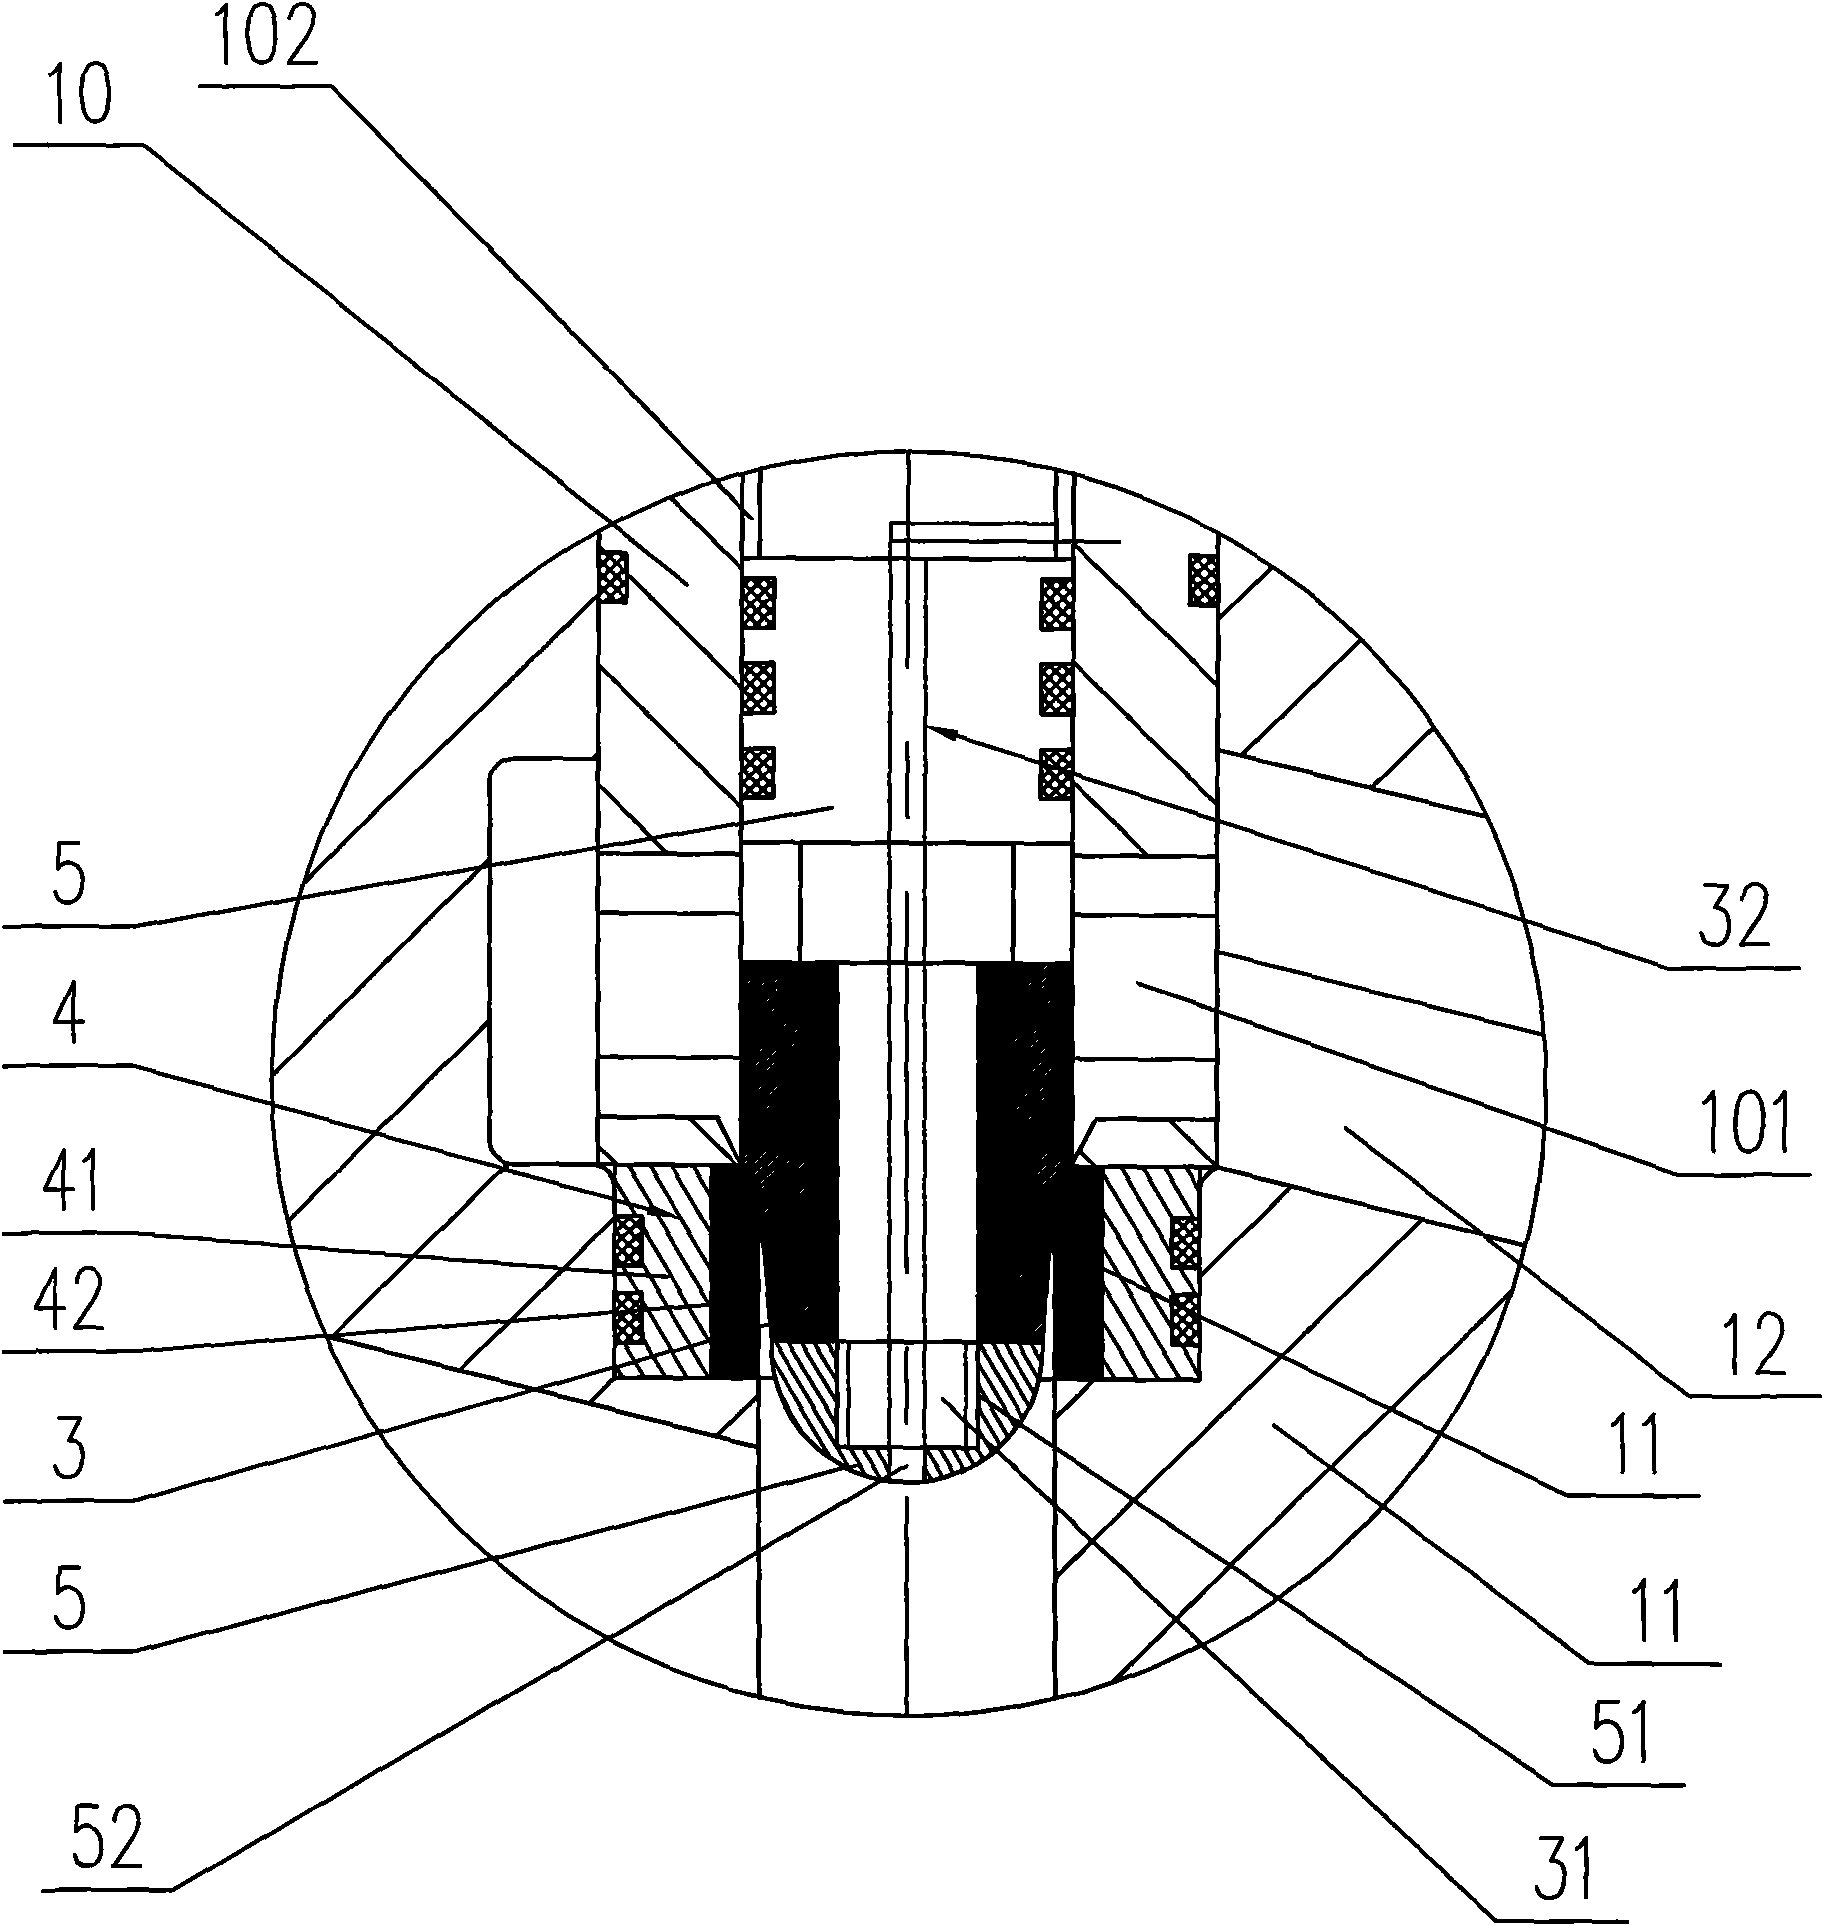 Self-hydraulic automatic regulation valve